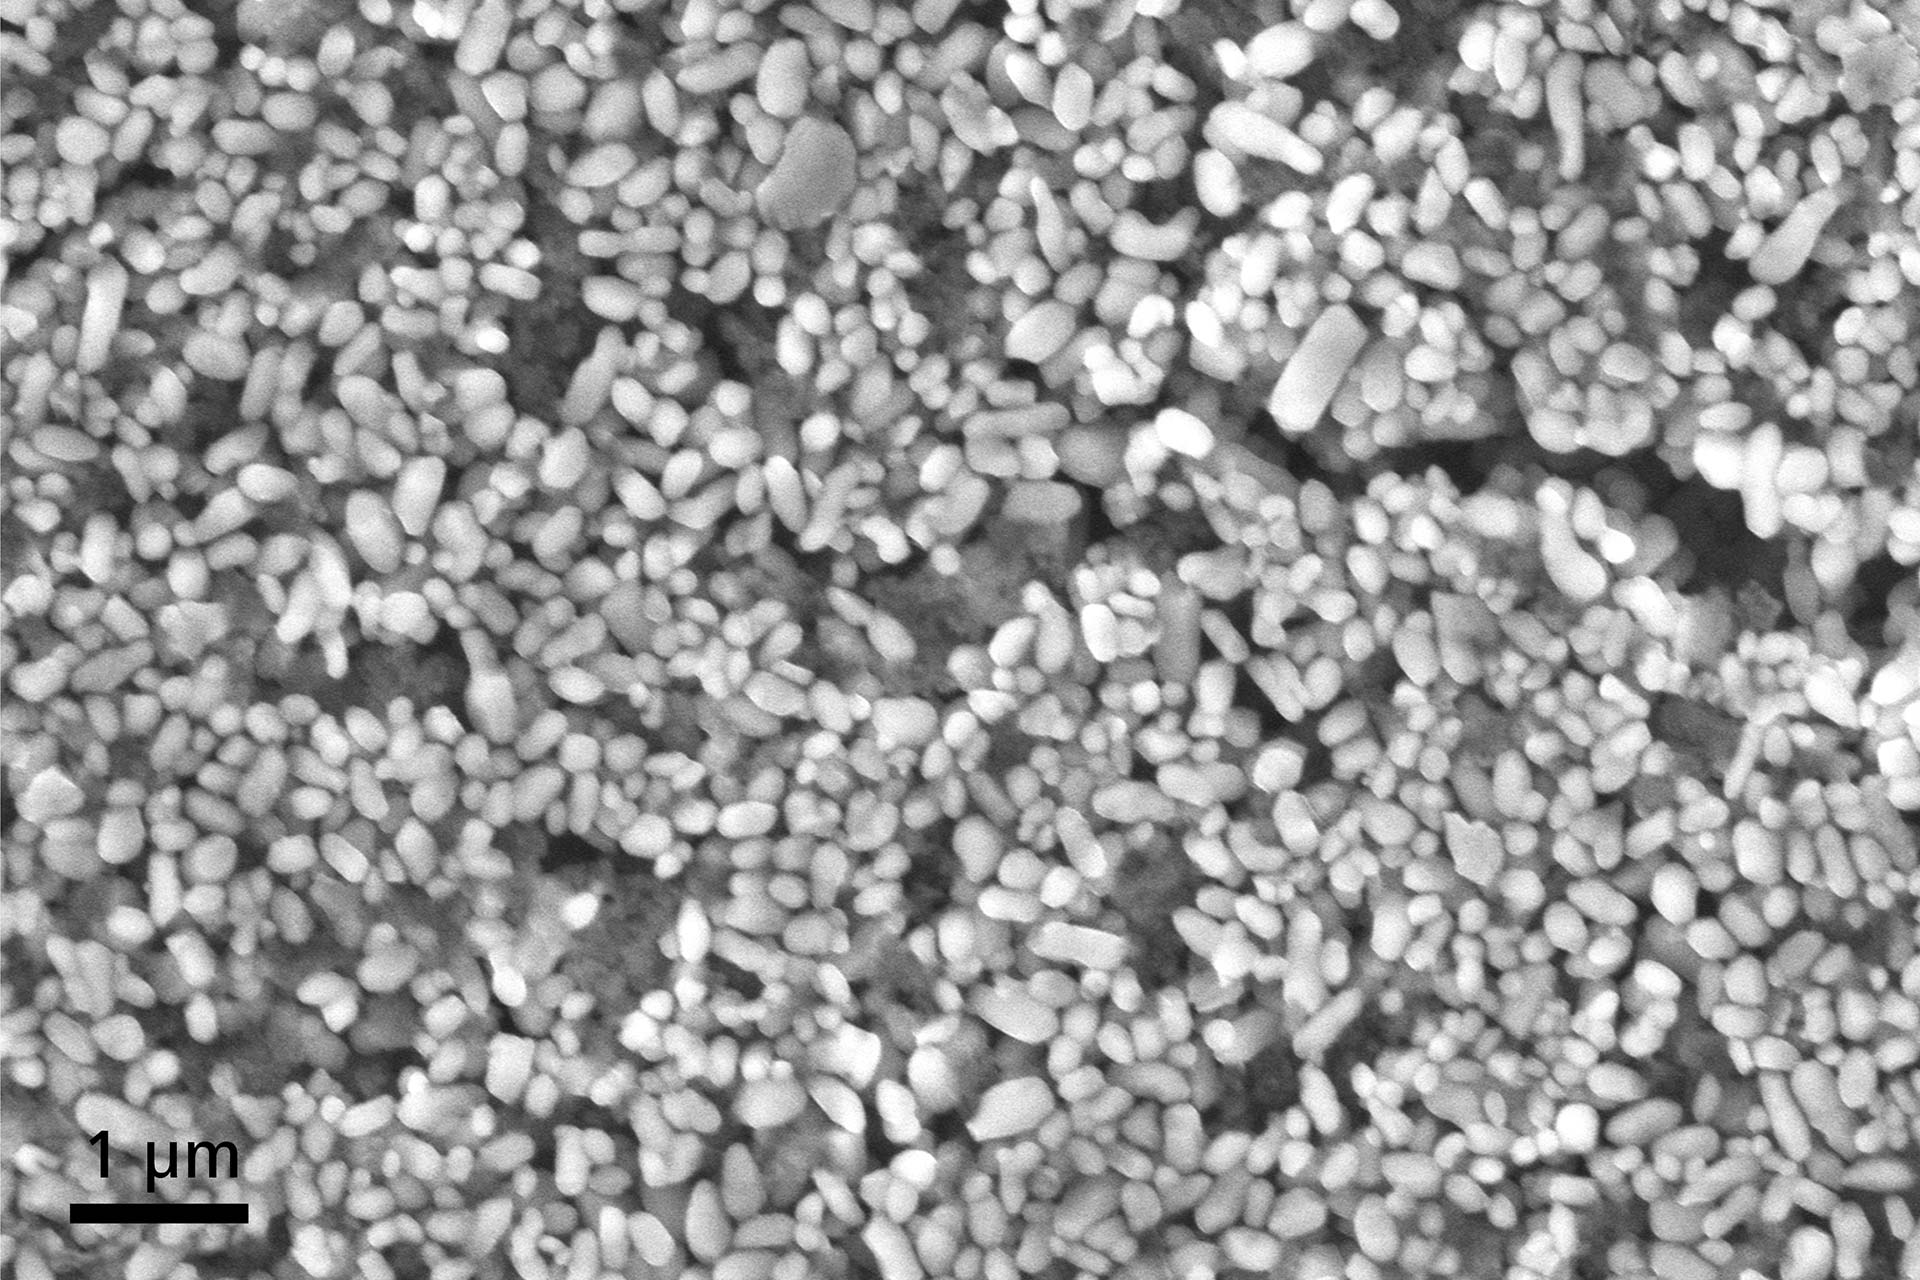 Nanoparticules de dioxyde de titane non conductrices